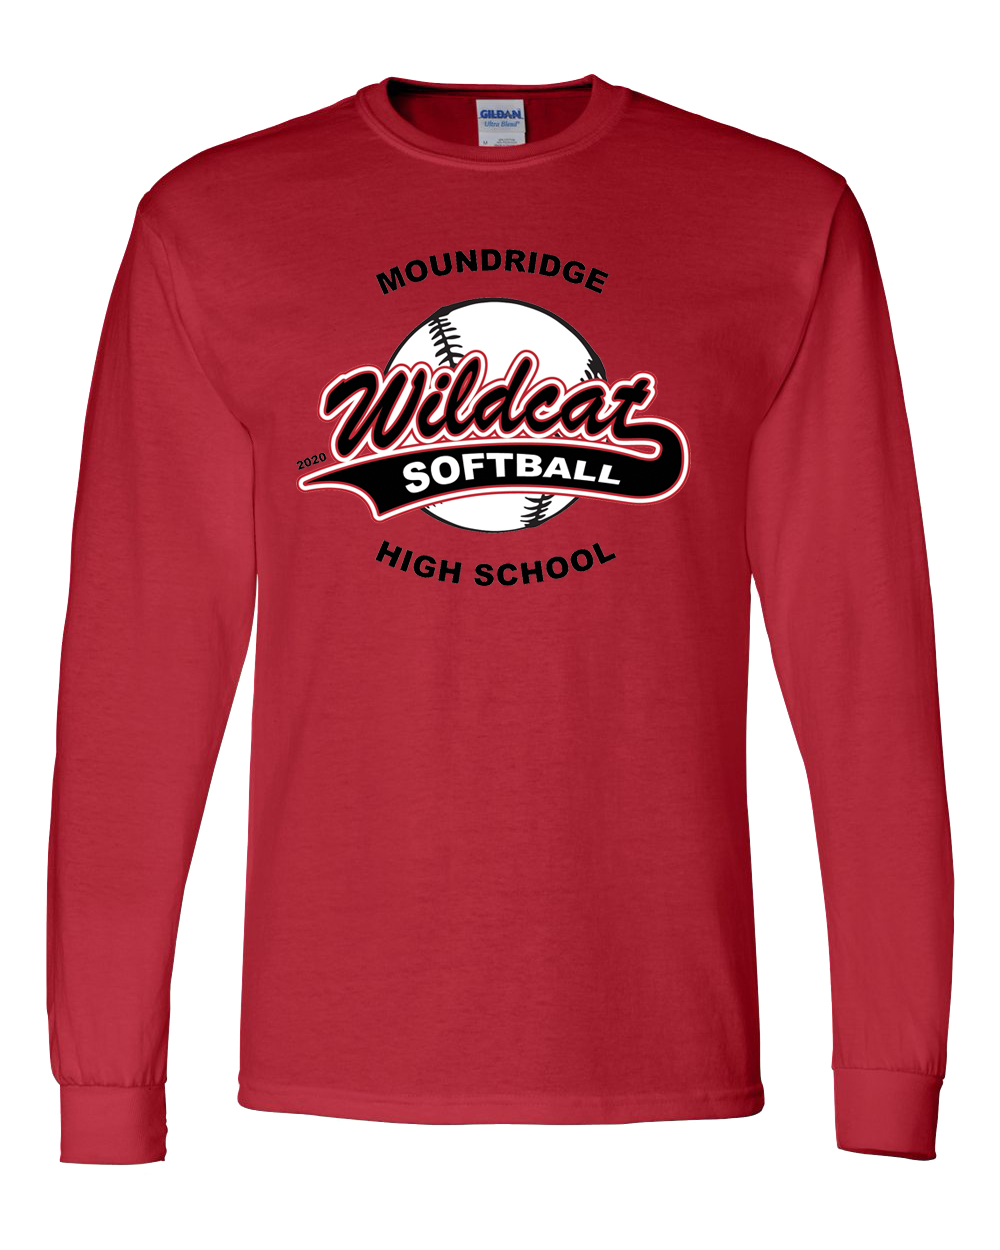 Moundridge High School Softball Long-Sleeve T-Shirt - Atomic